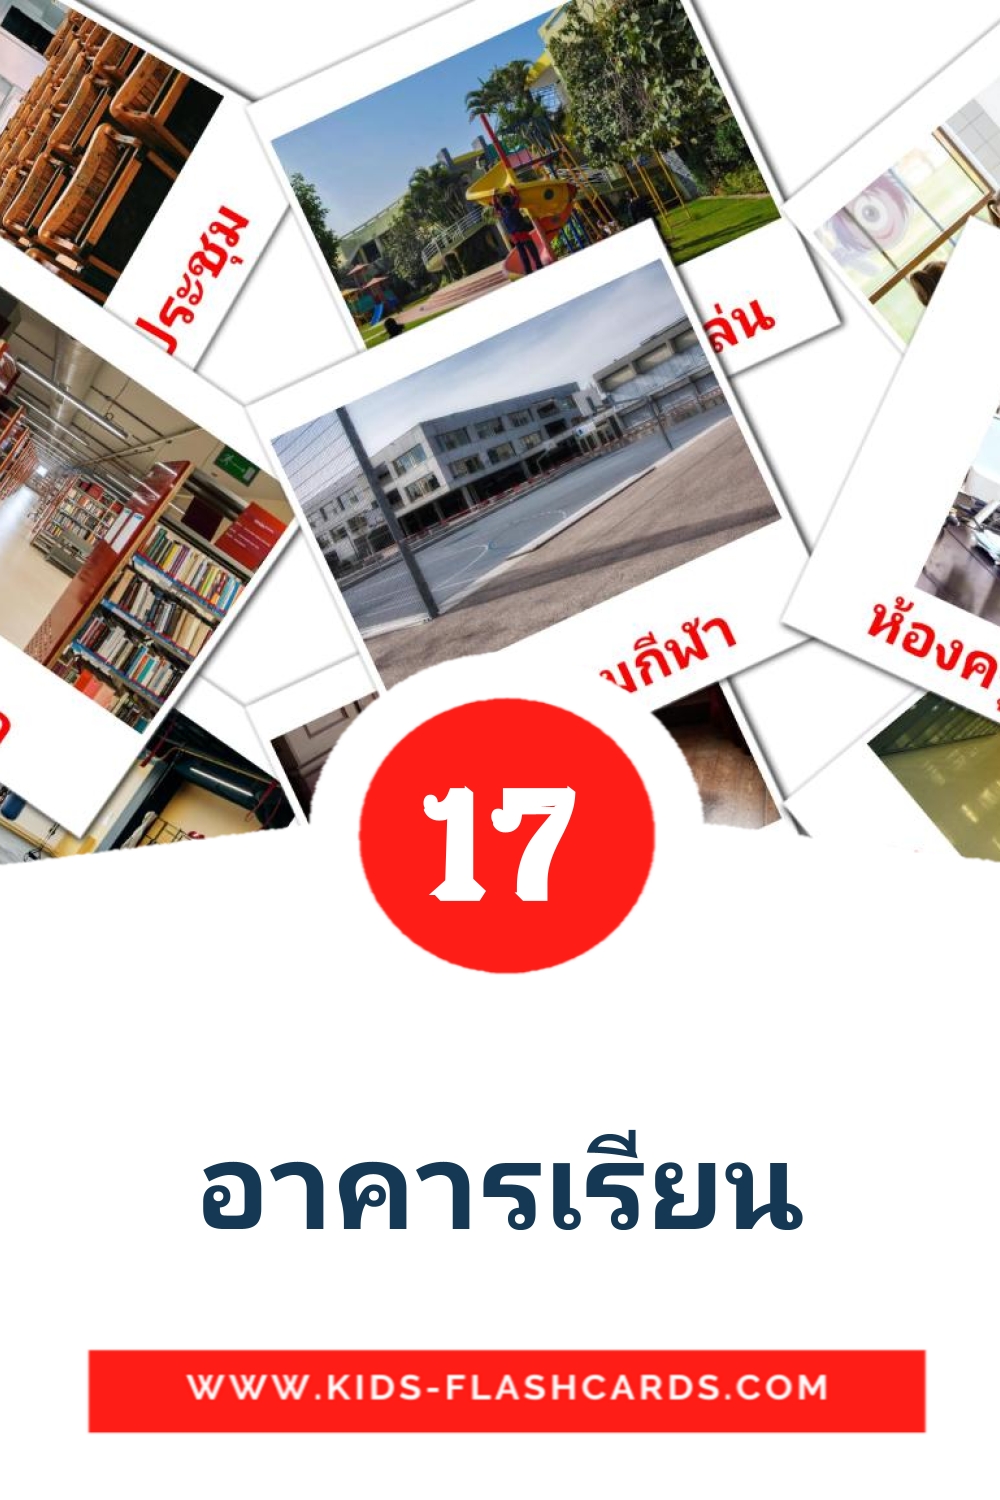 17 อาคารเรียน Bildkarten für den Kindergarten auf Thailändisch